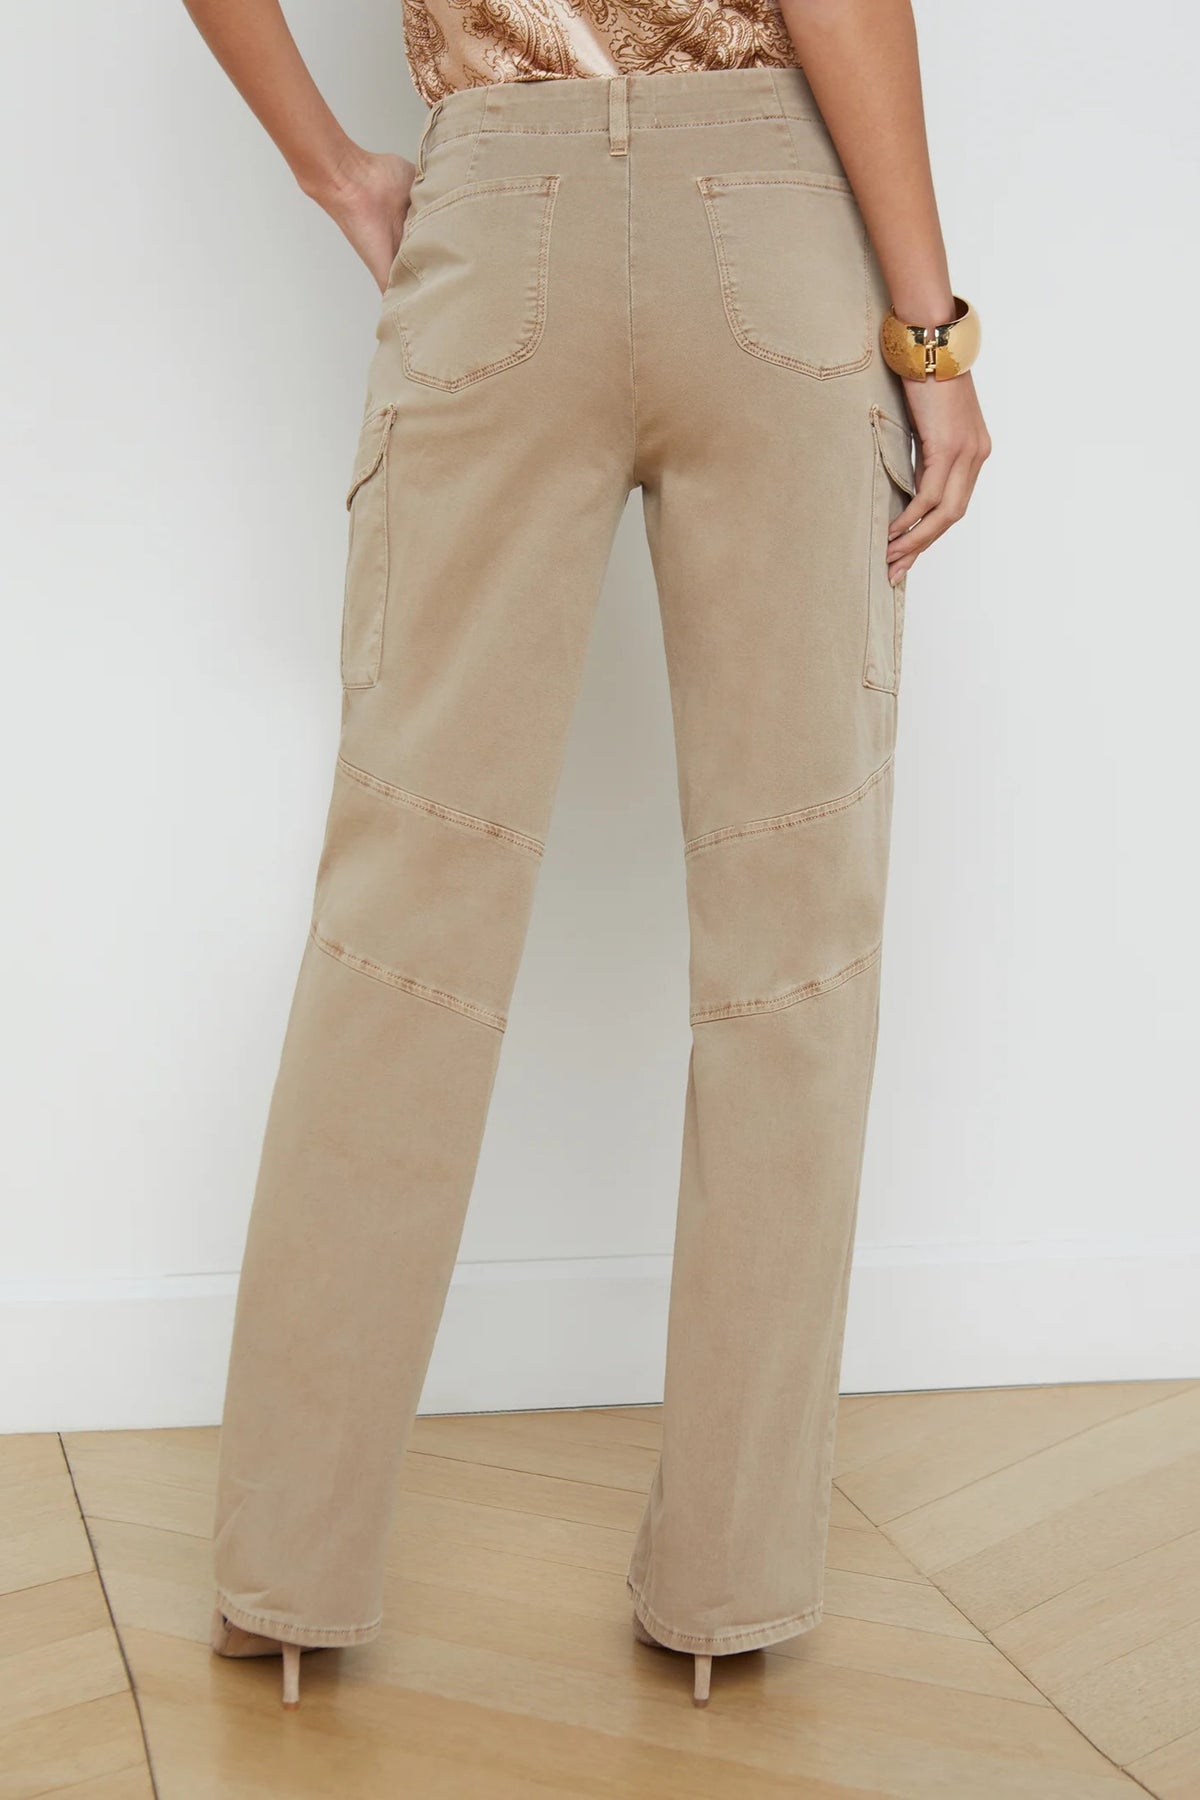 L'Agence Brooklyn - Pantalon utilitaire à jambe large et taille haute